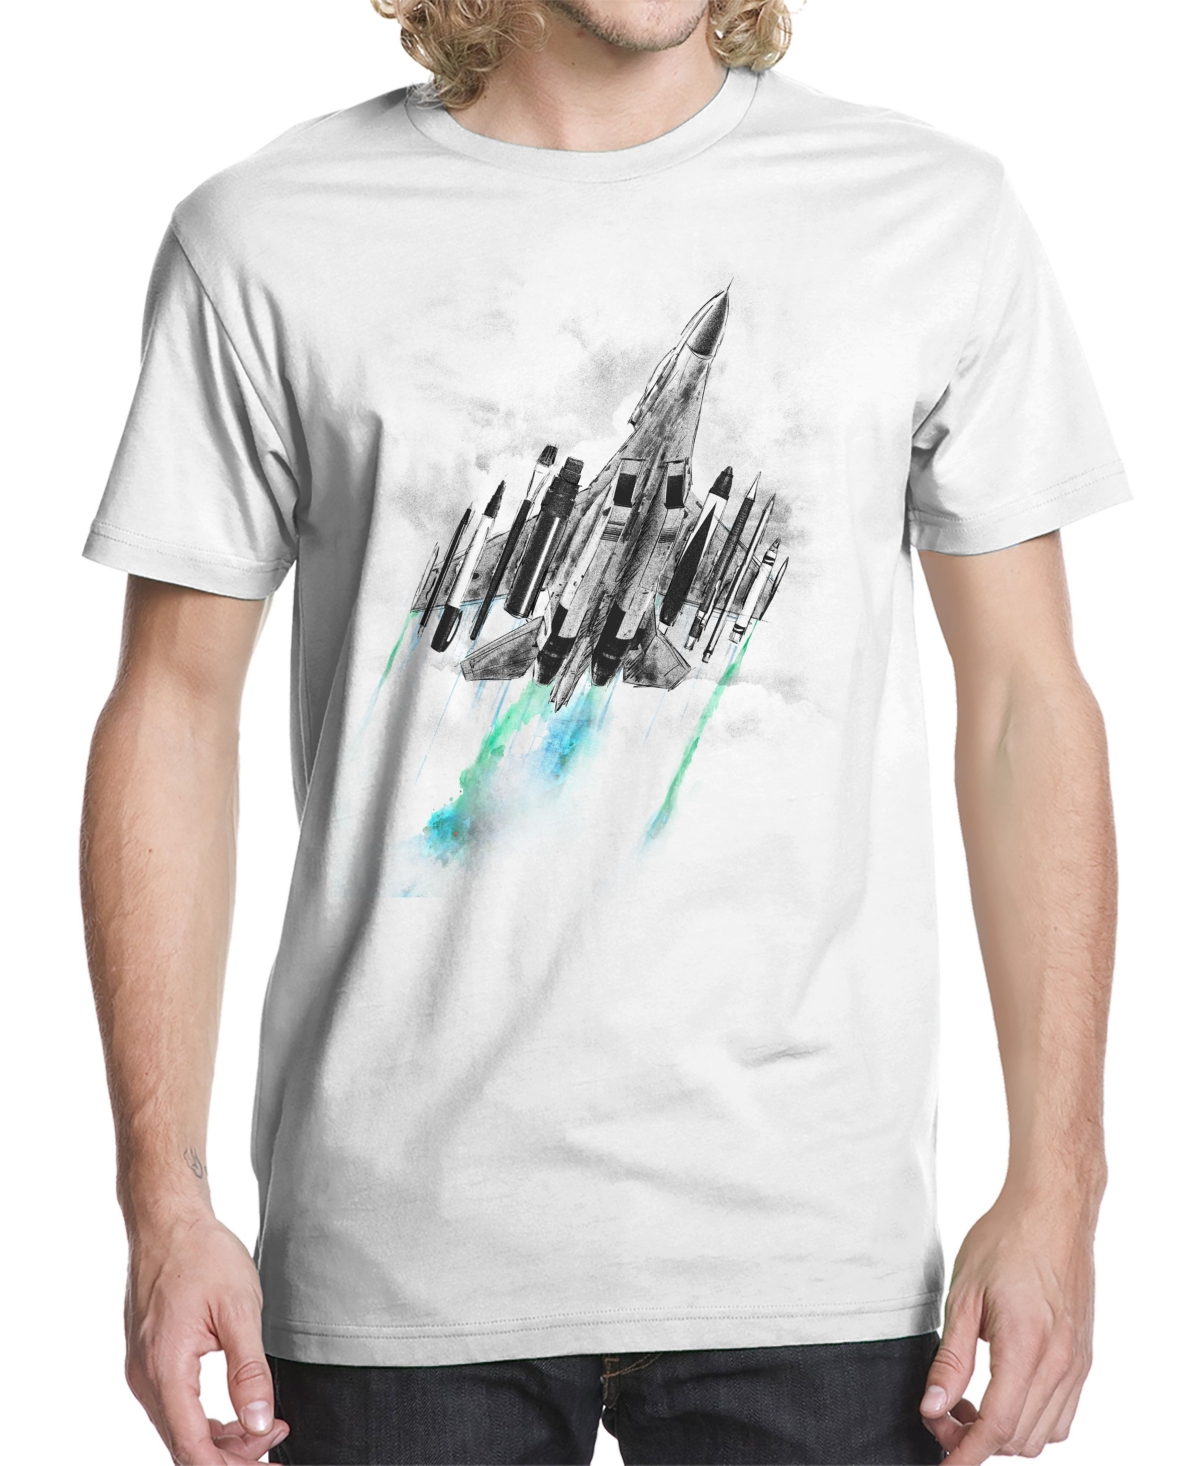 Men's Art Supply Fighter Jet Graphic T-shirt - White